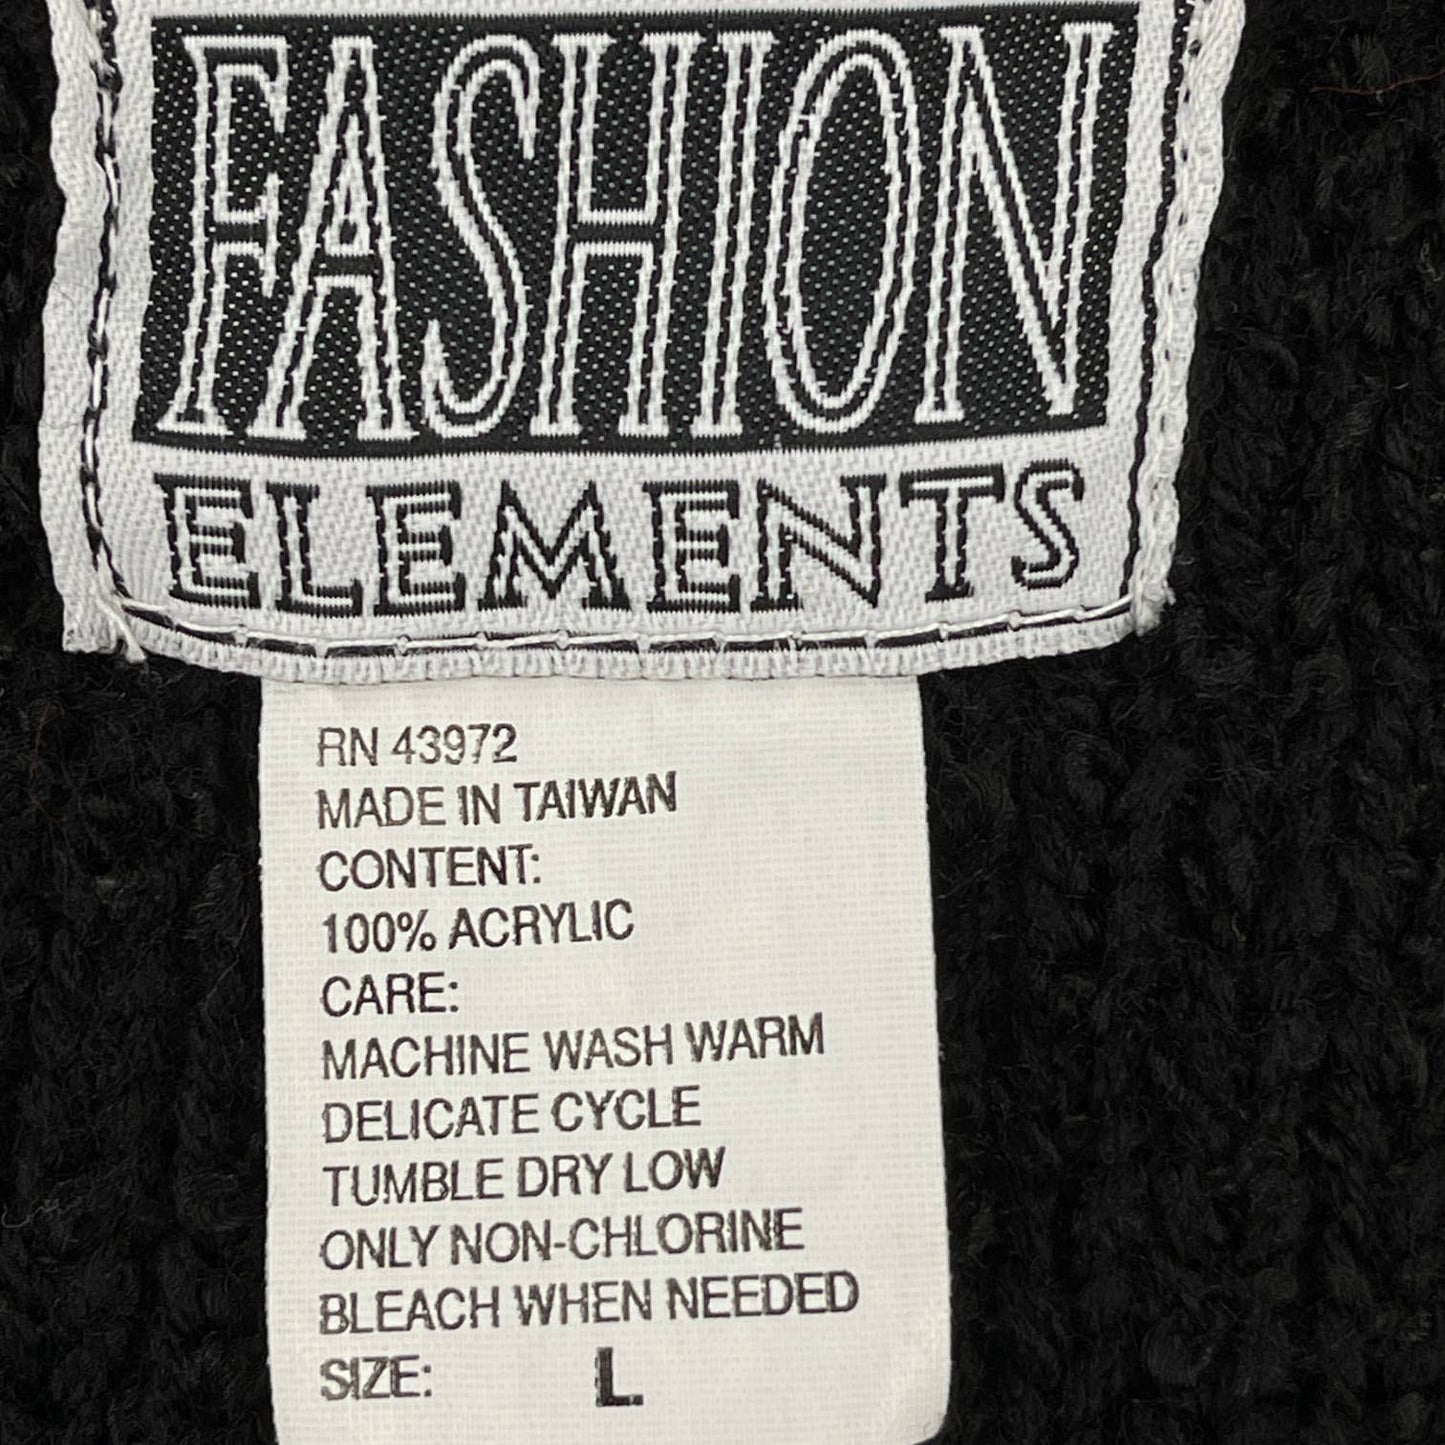 Vintage 80s Black Boucle Long Cardigan Sweater Coat Pockets Fashion Elements L